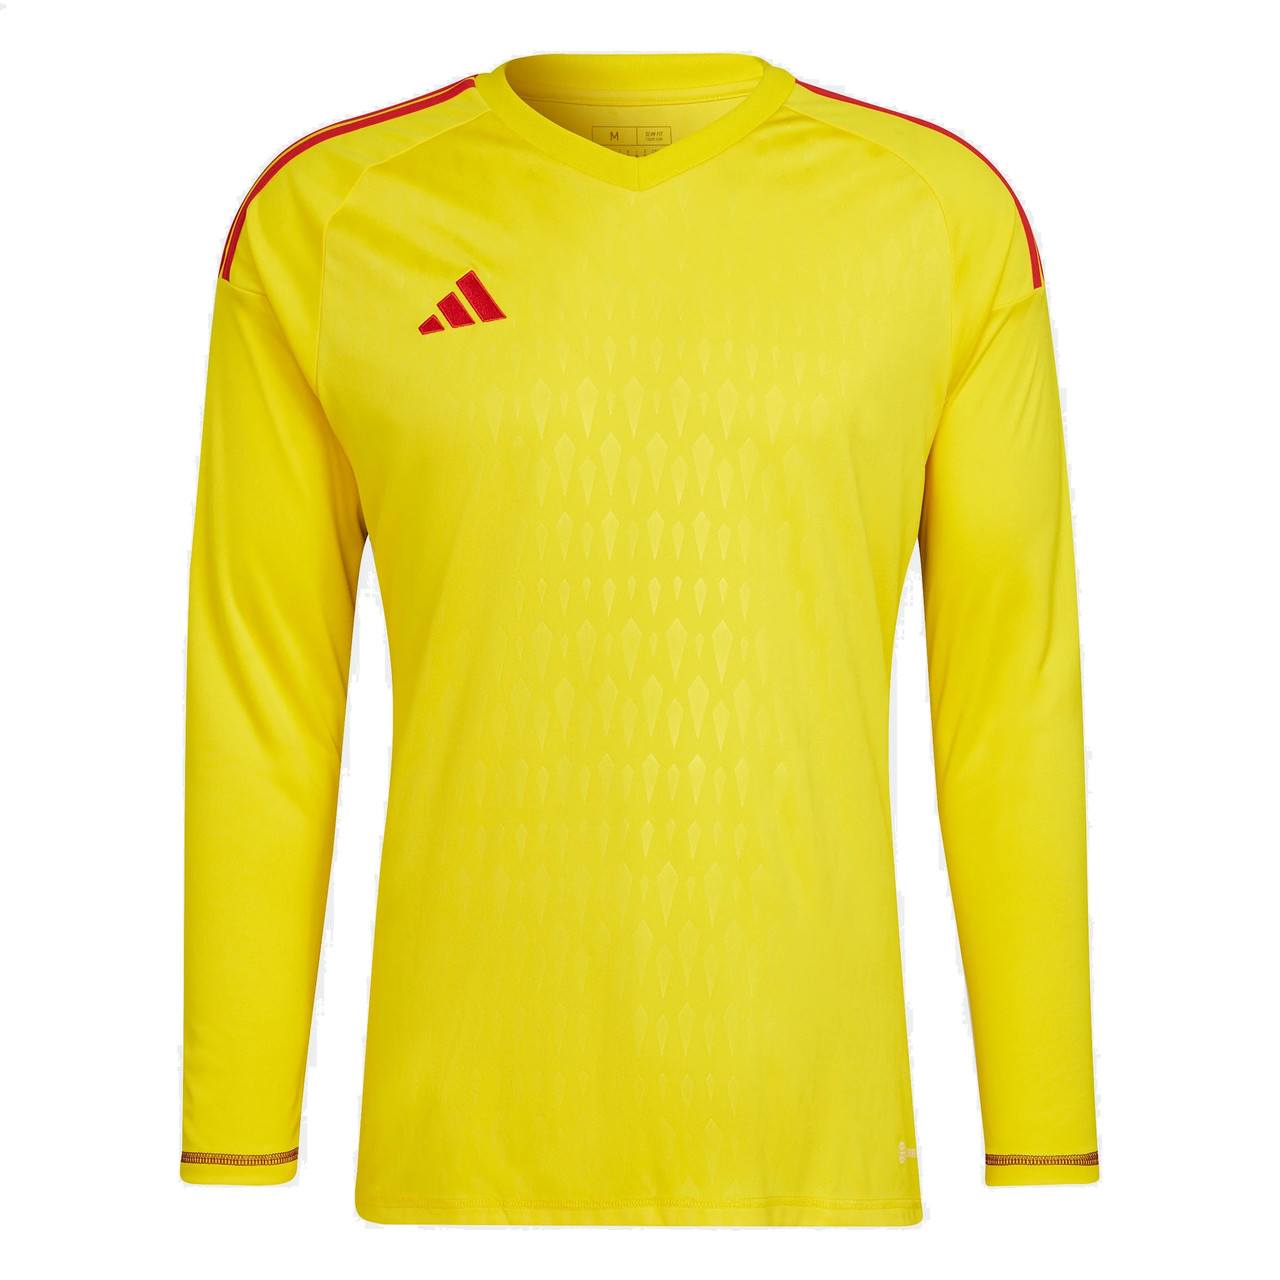 Adidas Men's T-Shirt - Yellow - M